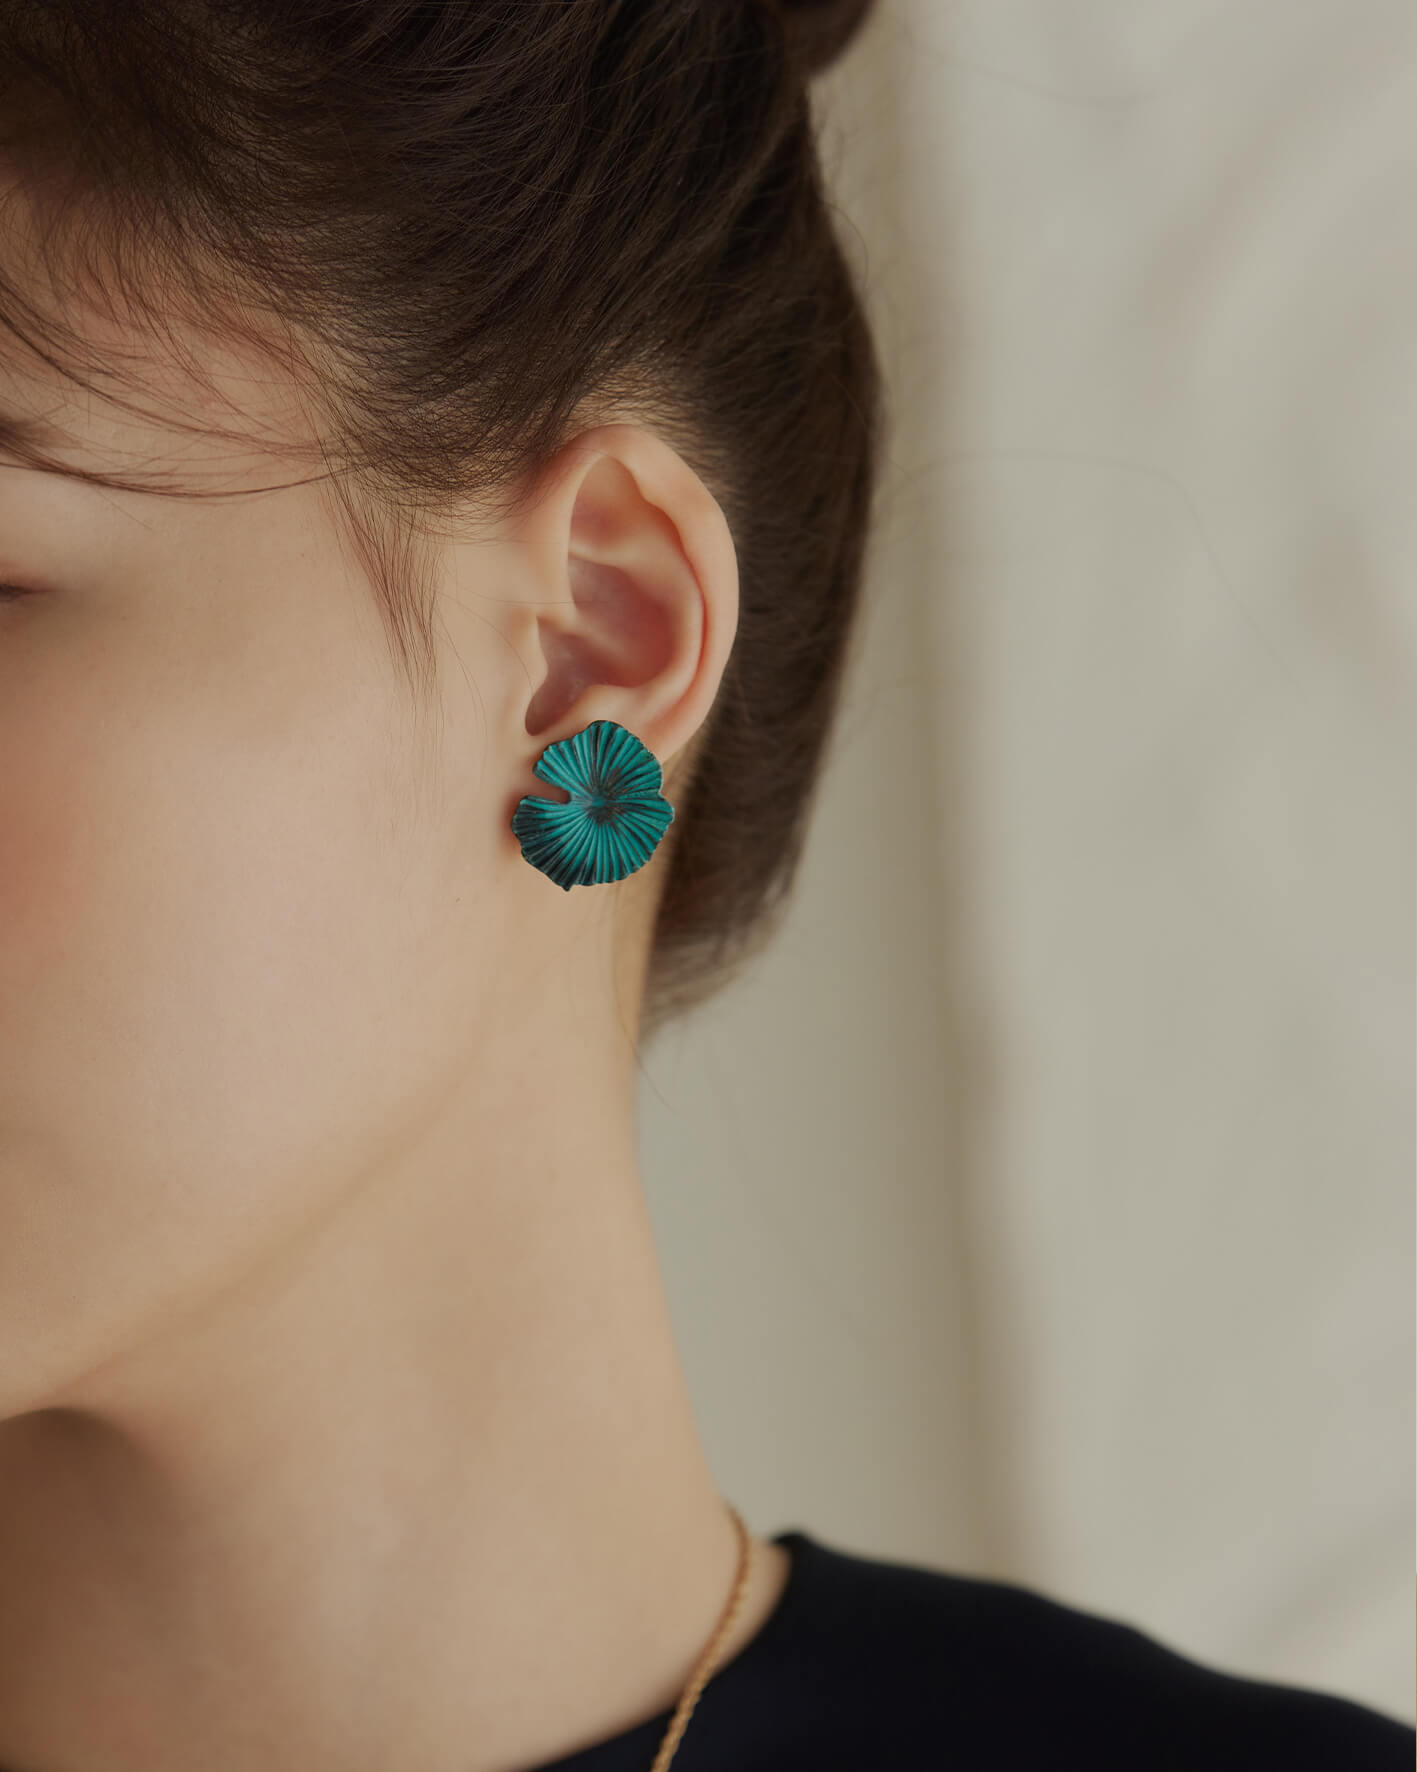 Eco安珂,韓國飾品,韓國耳環,藍綠色耳環,垂墜耳環,螺旋夾耳環,可調式耳夾耳環